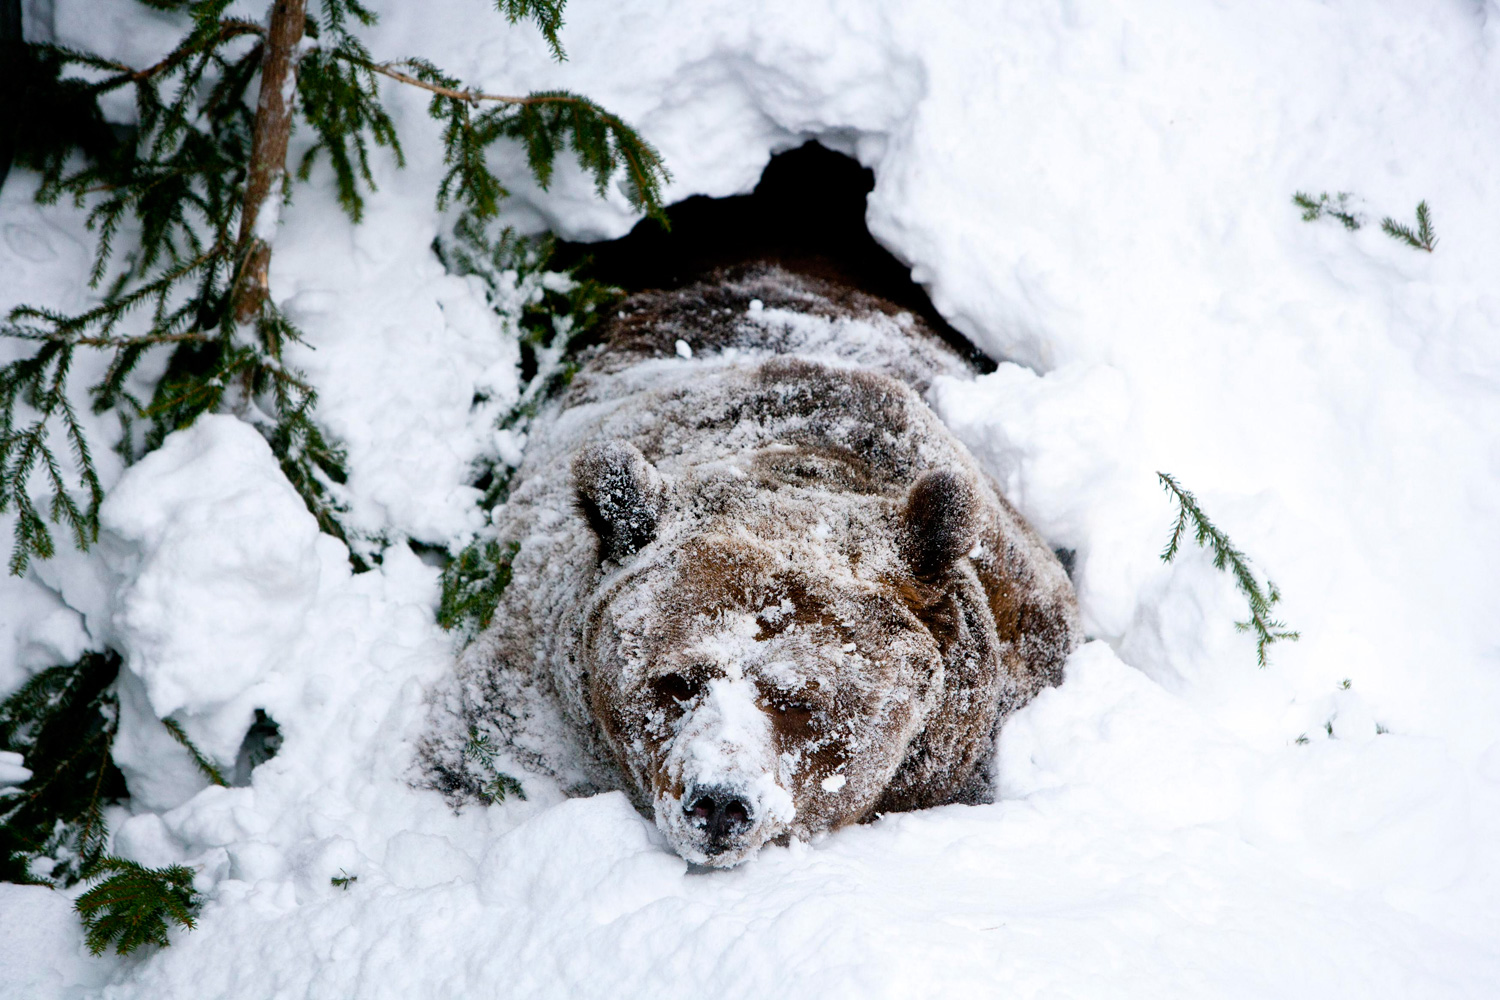 Feb. 23, 2012. Palle-Jooseppi, a male brown bear at Ranua Zoo, wakes up after winter hibernation in Ranua, Finland.